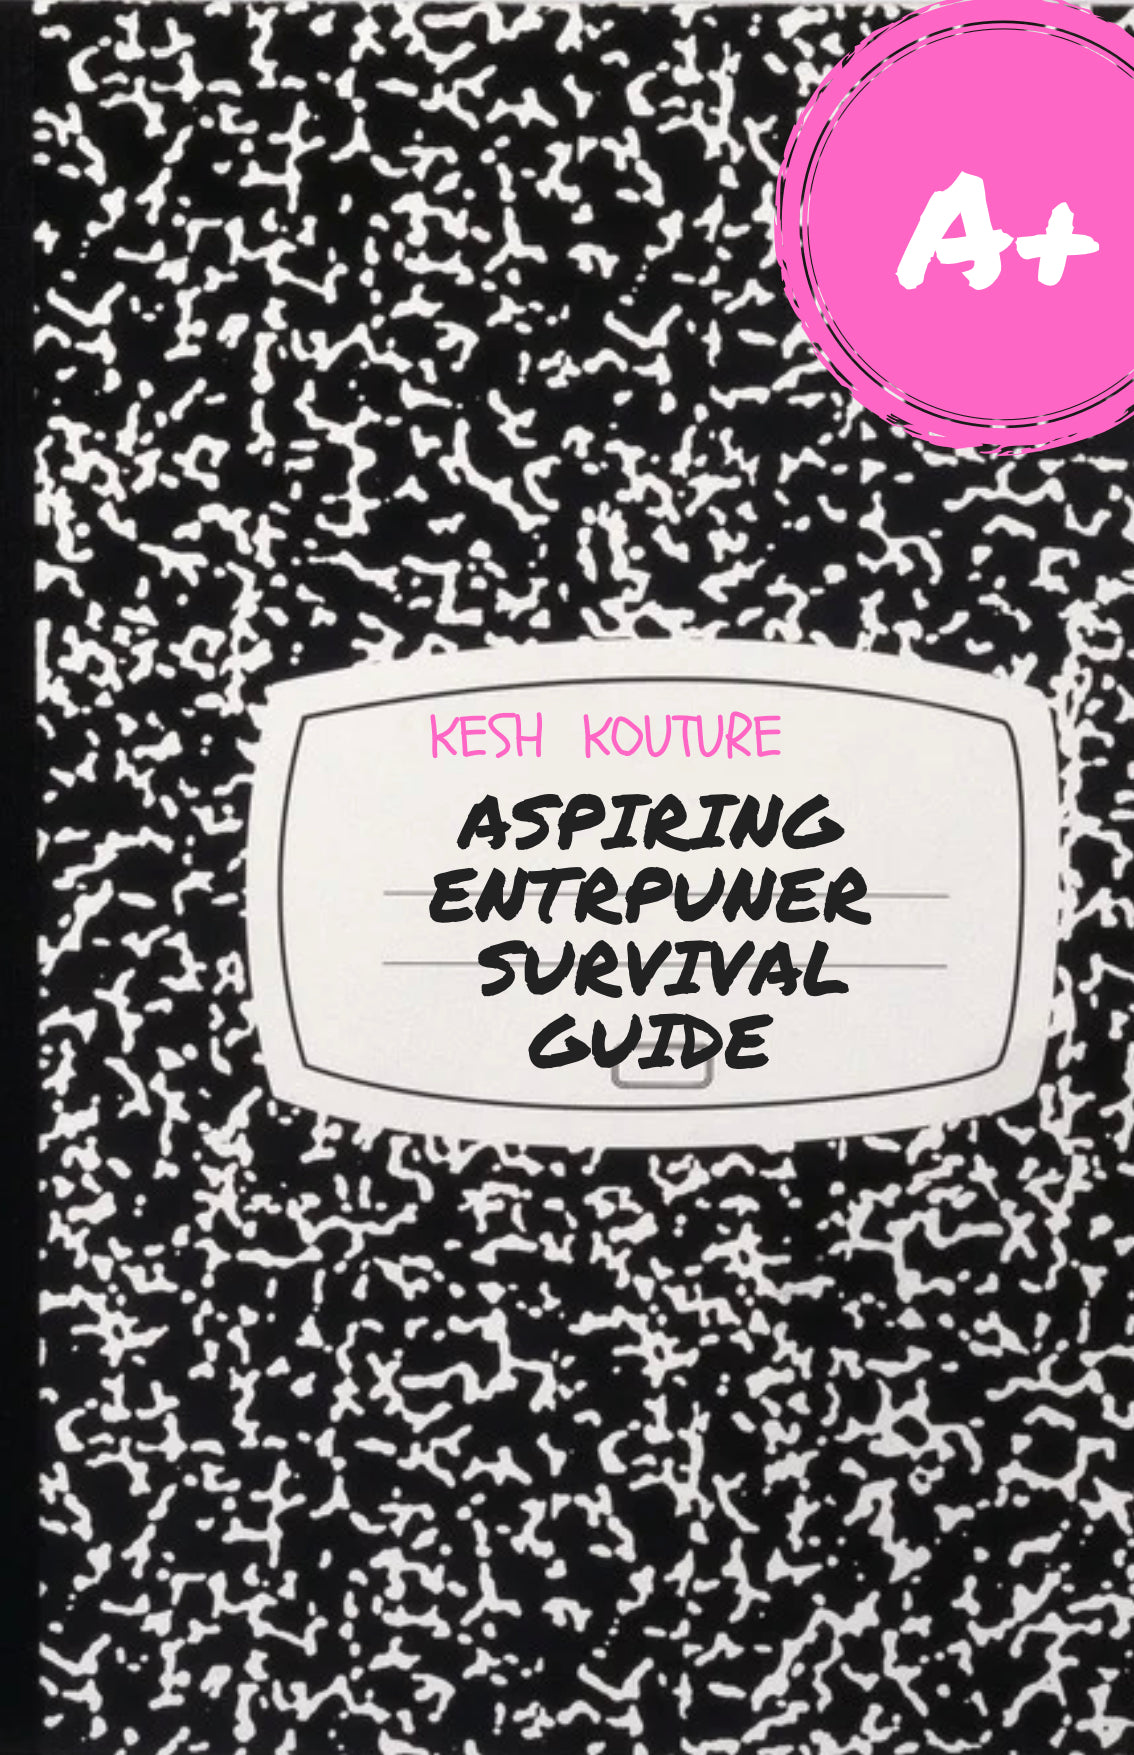 Aspiring Entrepreneural Survival Guide